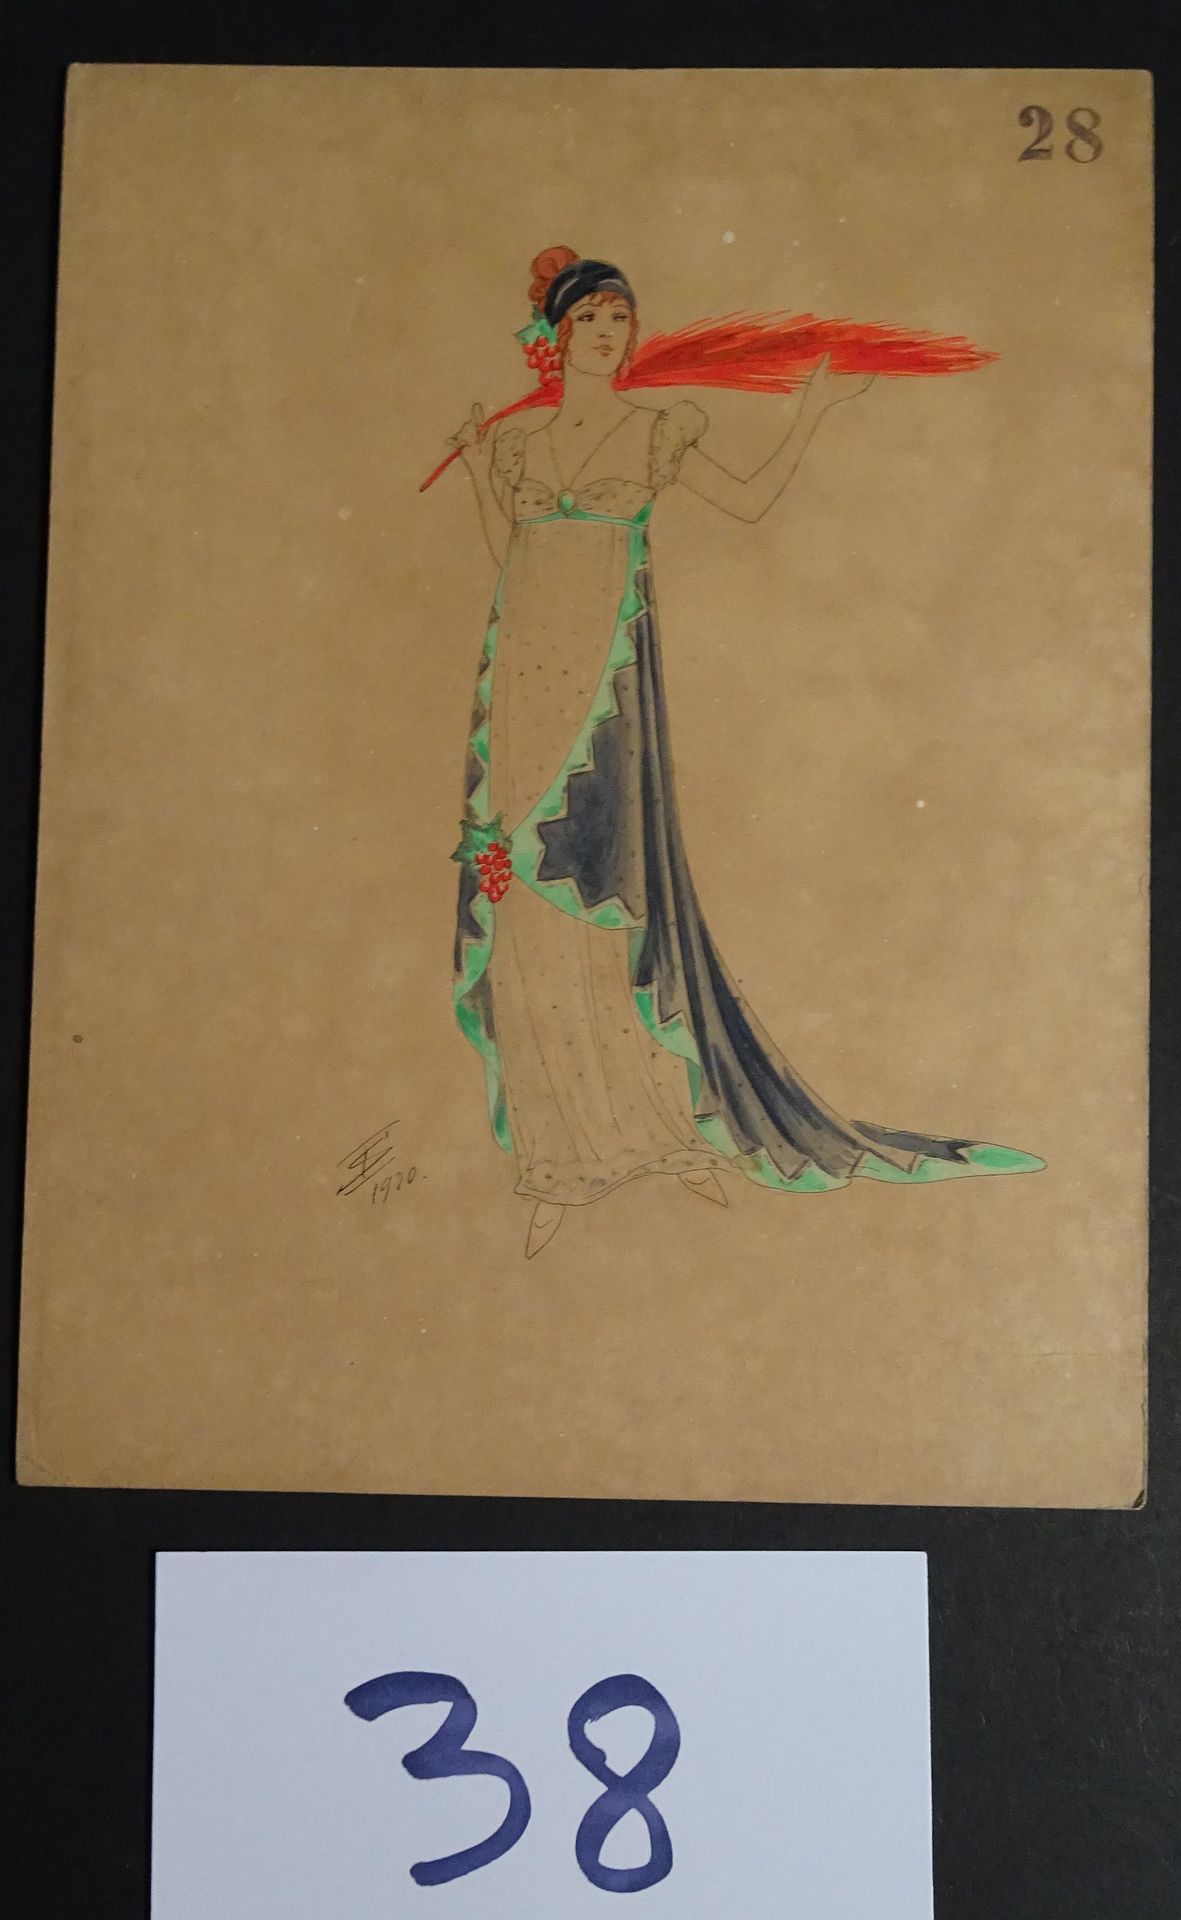 SOKOLOFF 索科洛夫-伊戈尔（20世纪初

"手持红扇的女人"。钢笔、墨水和水彩画。左下角有签名，日期为1920年。